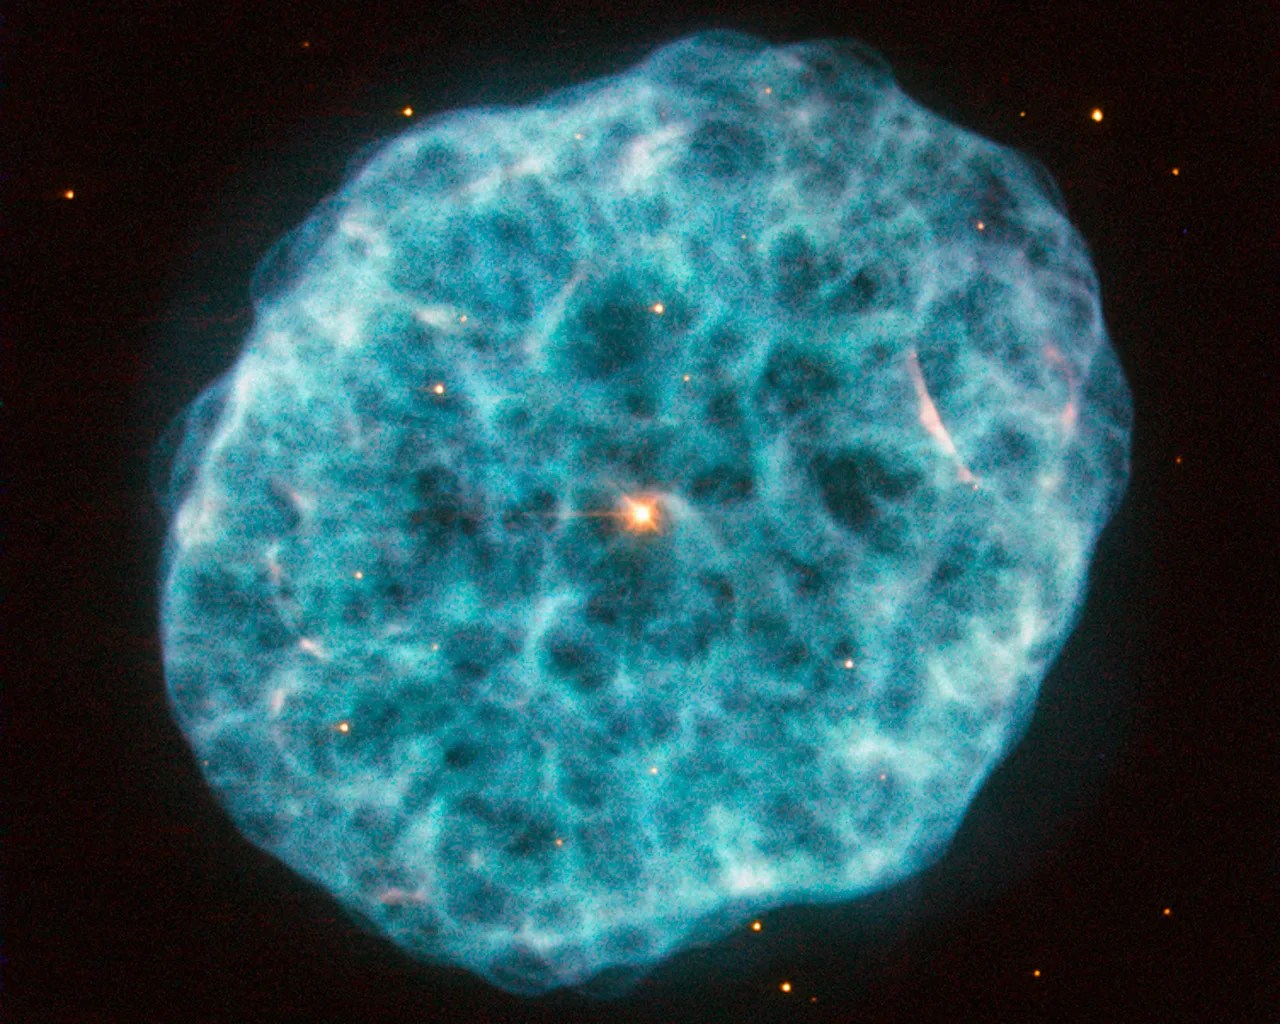 Hubble image of planetary nebula ngc 1501